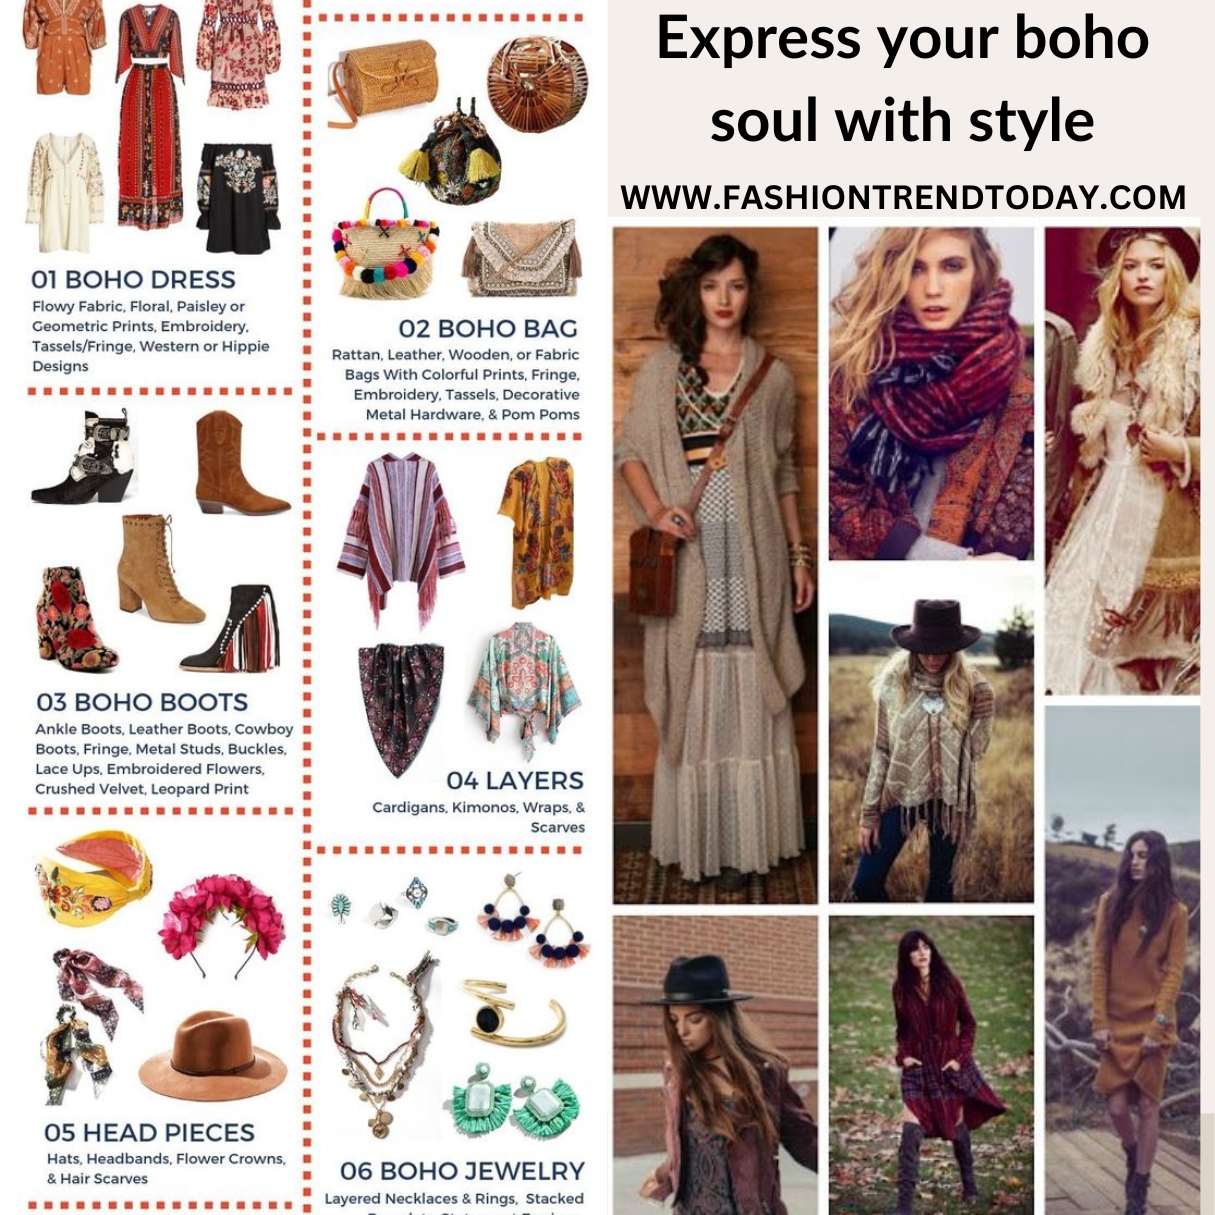 Boho Style: Express your boho soul with style